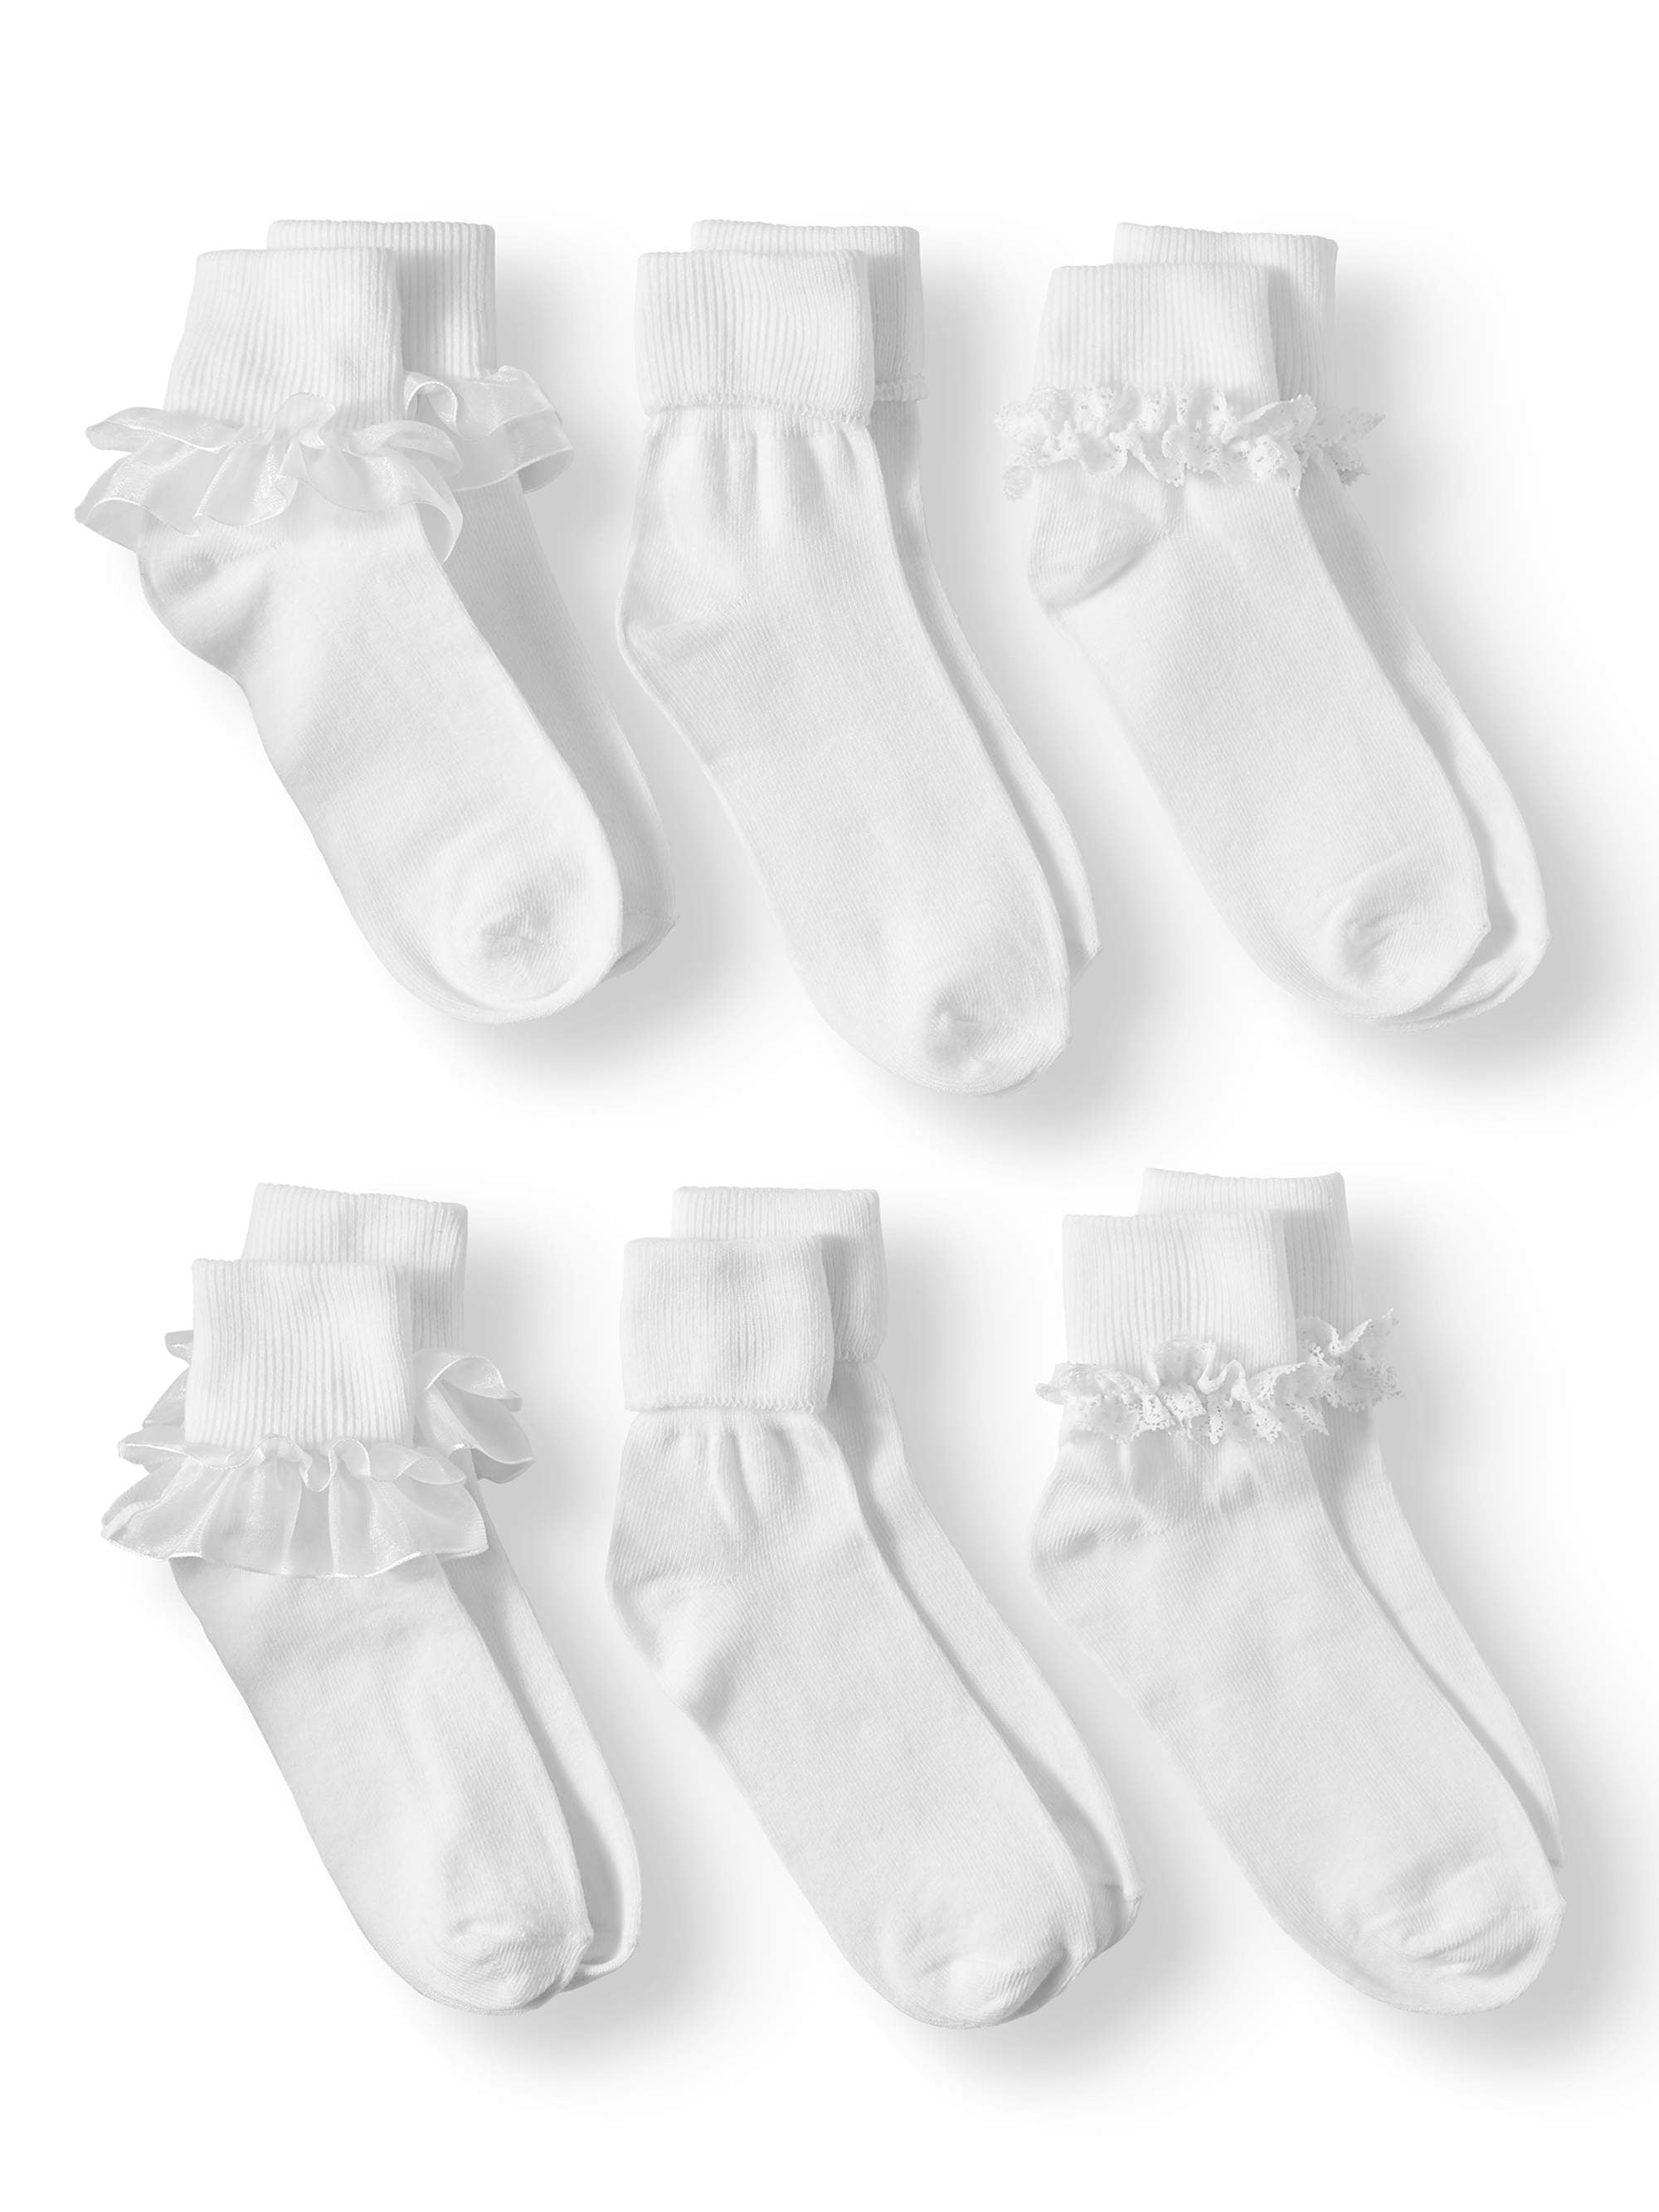 Size Large 5-pack 5-6t Kids Fun Striped Cotton Socks 